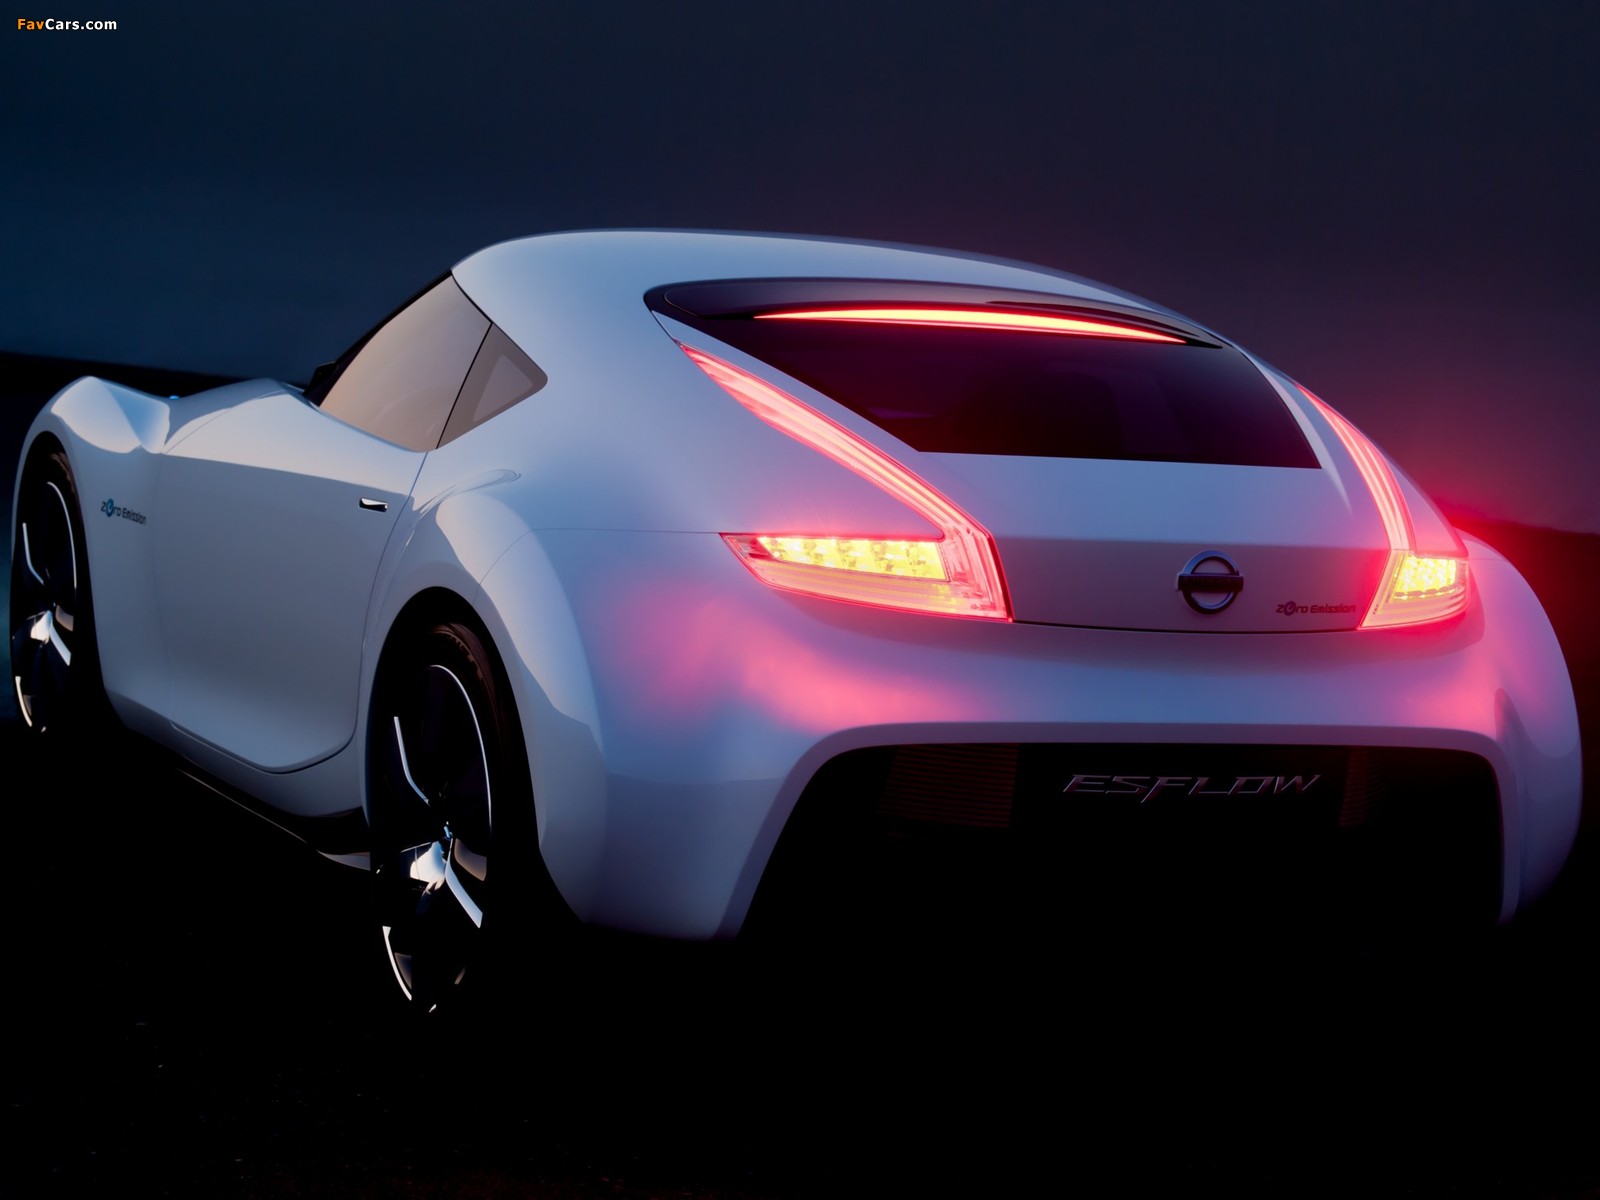 Pictures of Nissan Esflow Concept 2011 (1600 x 1200)